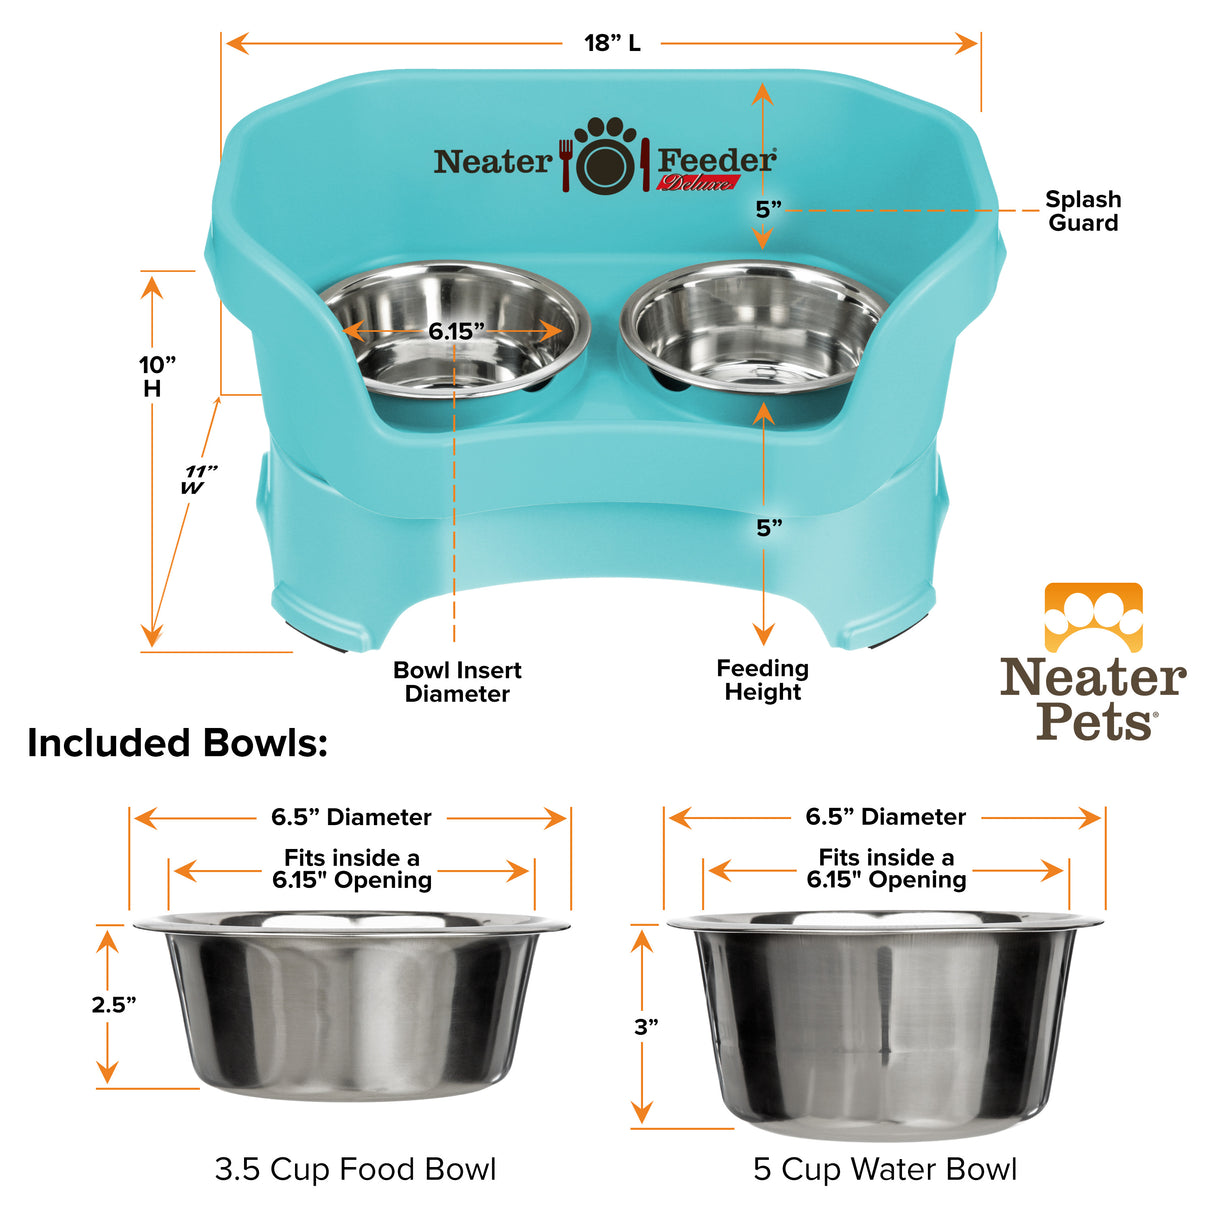 Deluxe Aqua Medium Dog Neater Feeder and Bowl dimensions